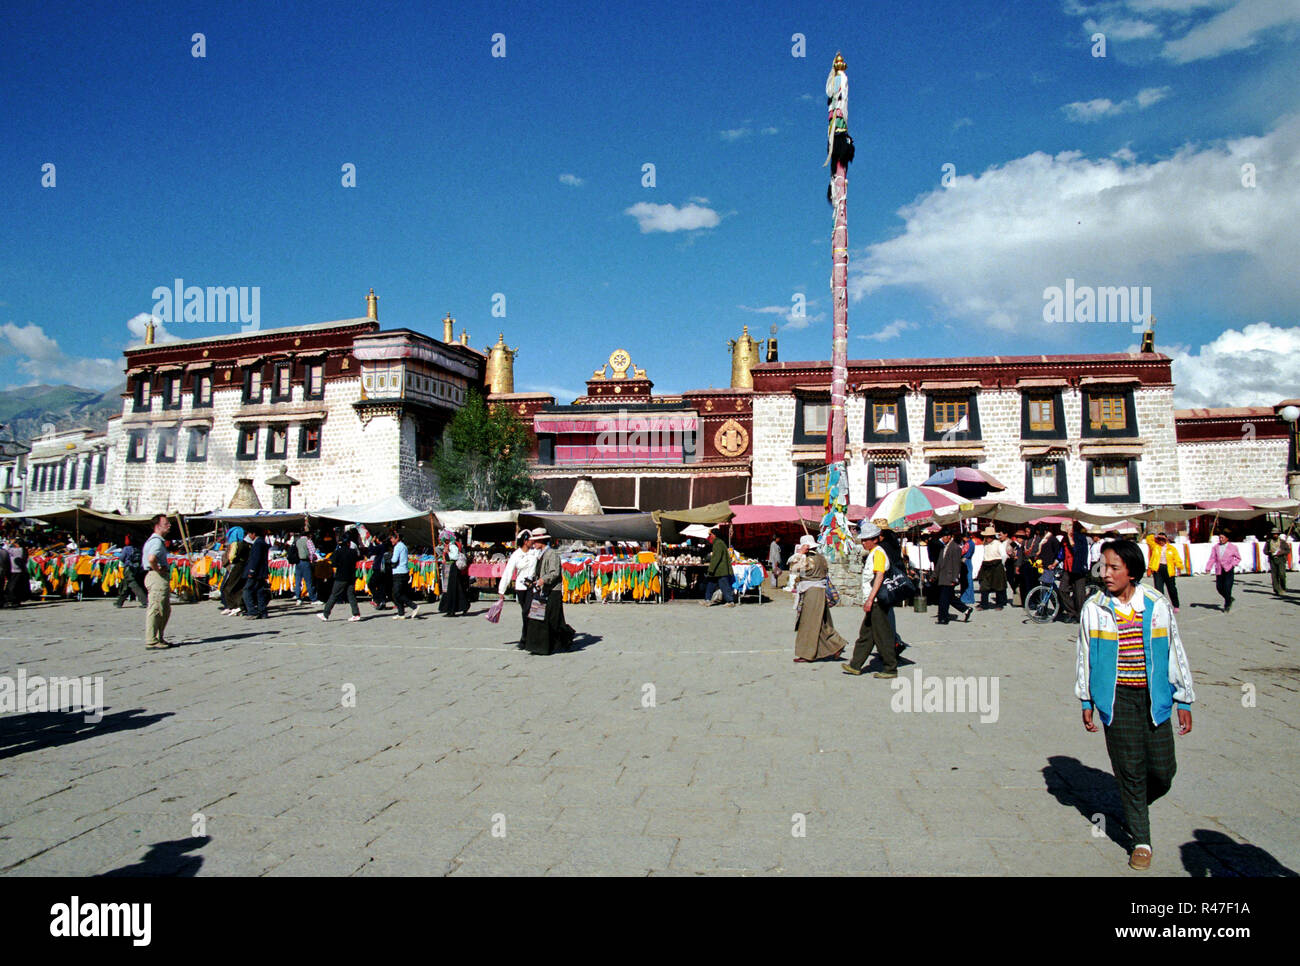 Lhassa, Tibet : Menschen auf dem Platz vor dem Tempel Jokhang. - 15.05.1998 Banque D'Images